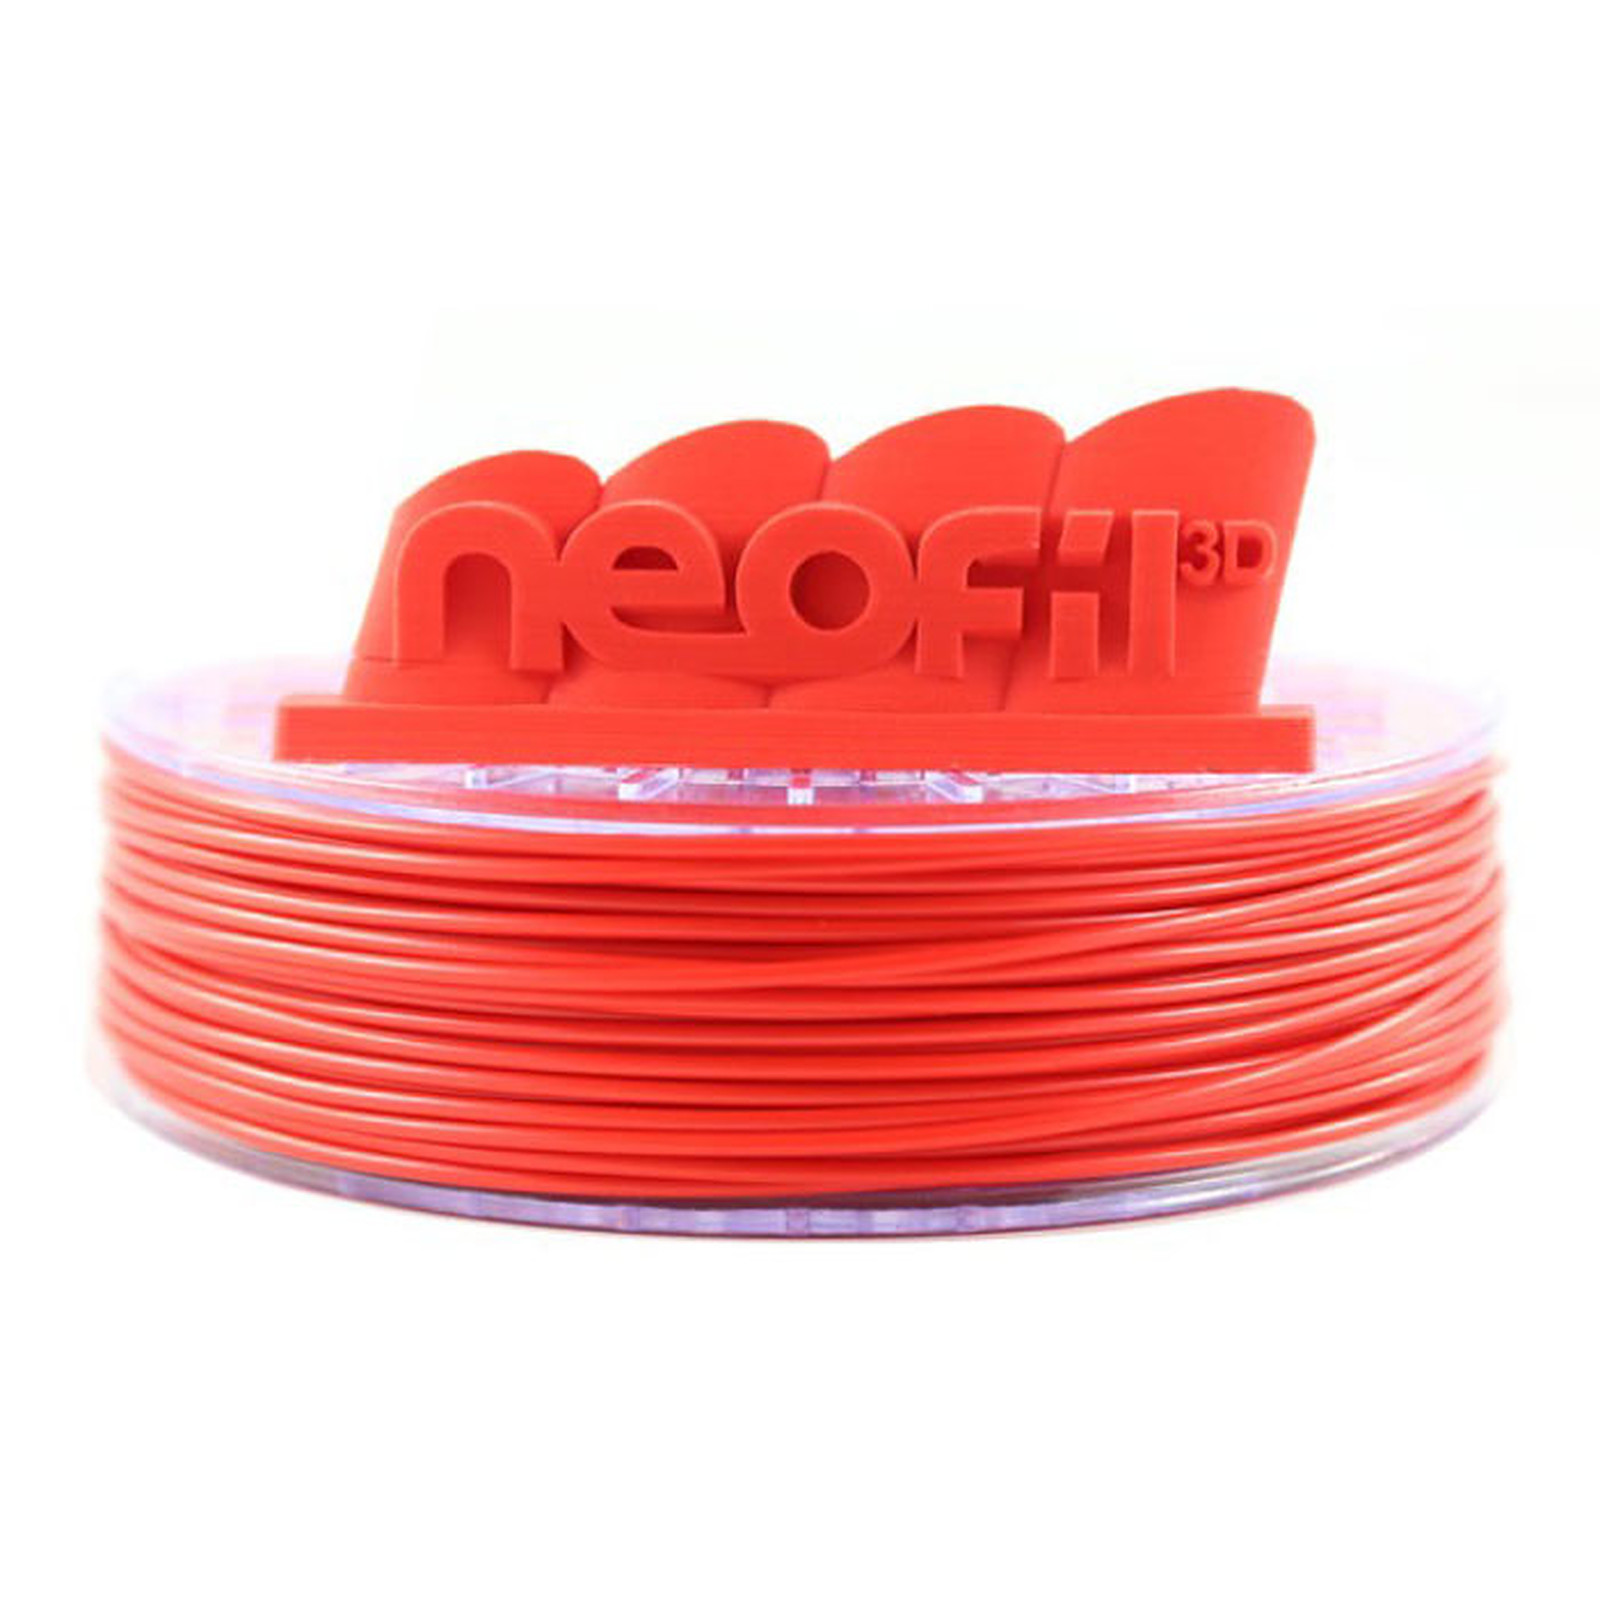 Neofil3D Bobine ABS 1.75mm 750g - Rouge - Filament 3D Neofil3D